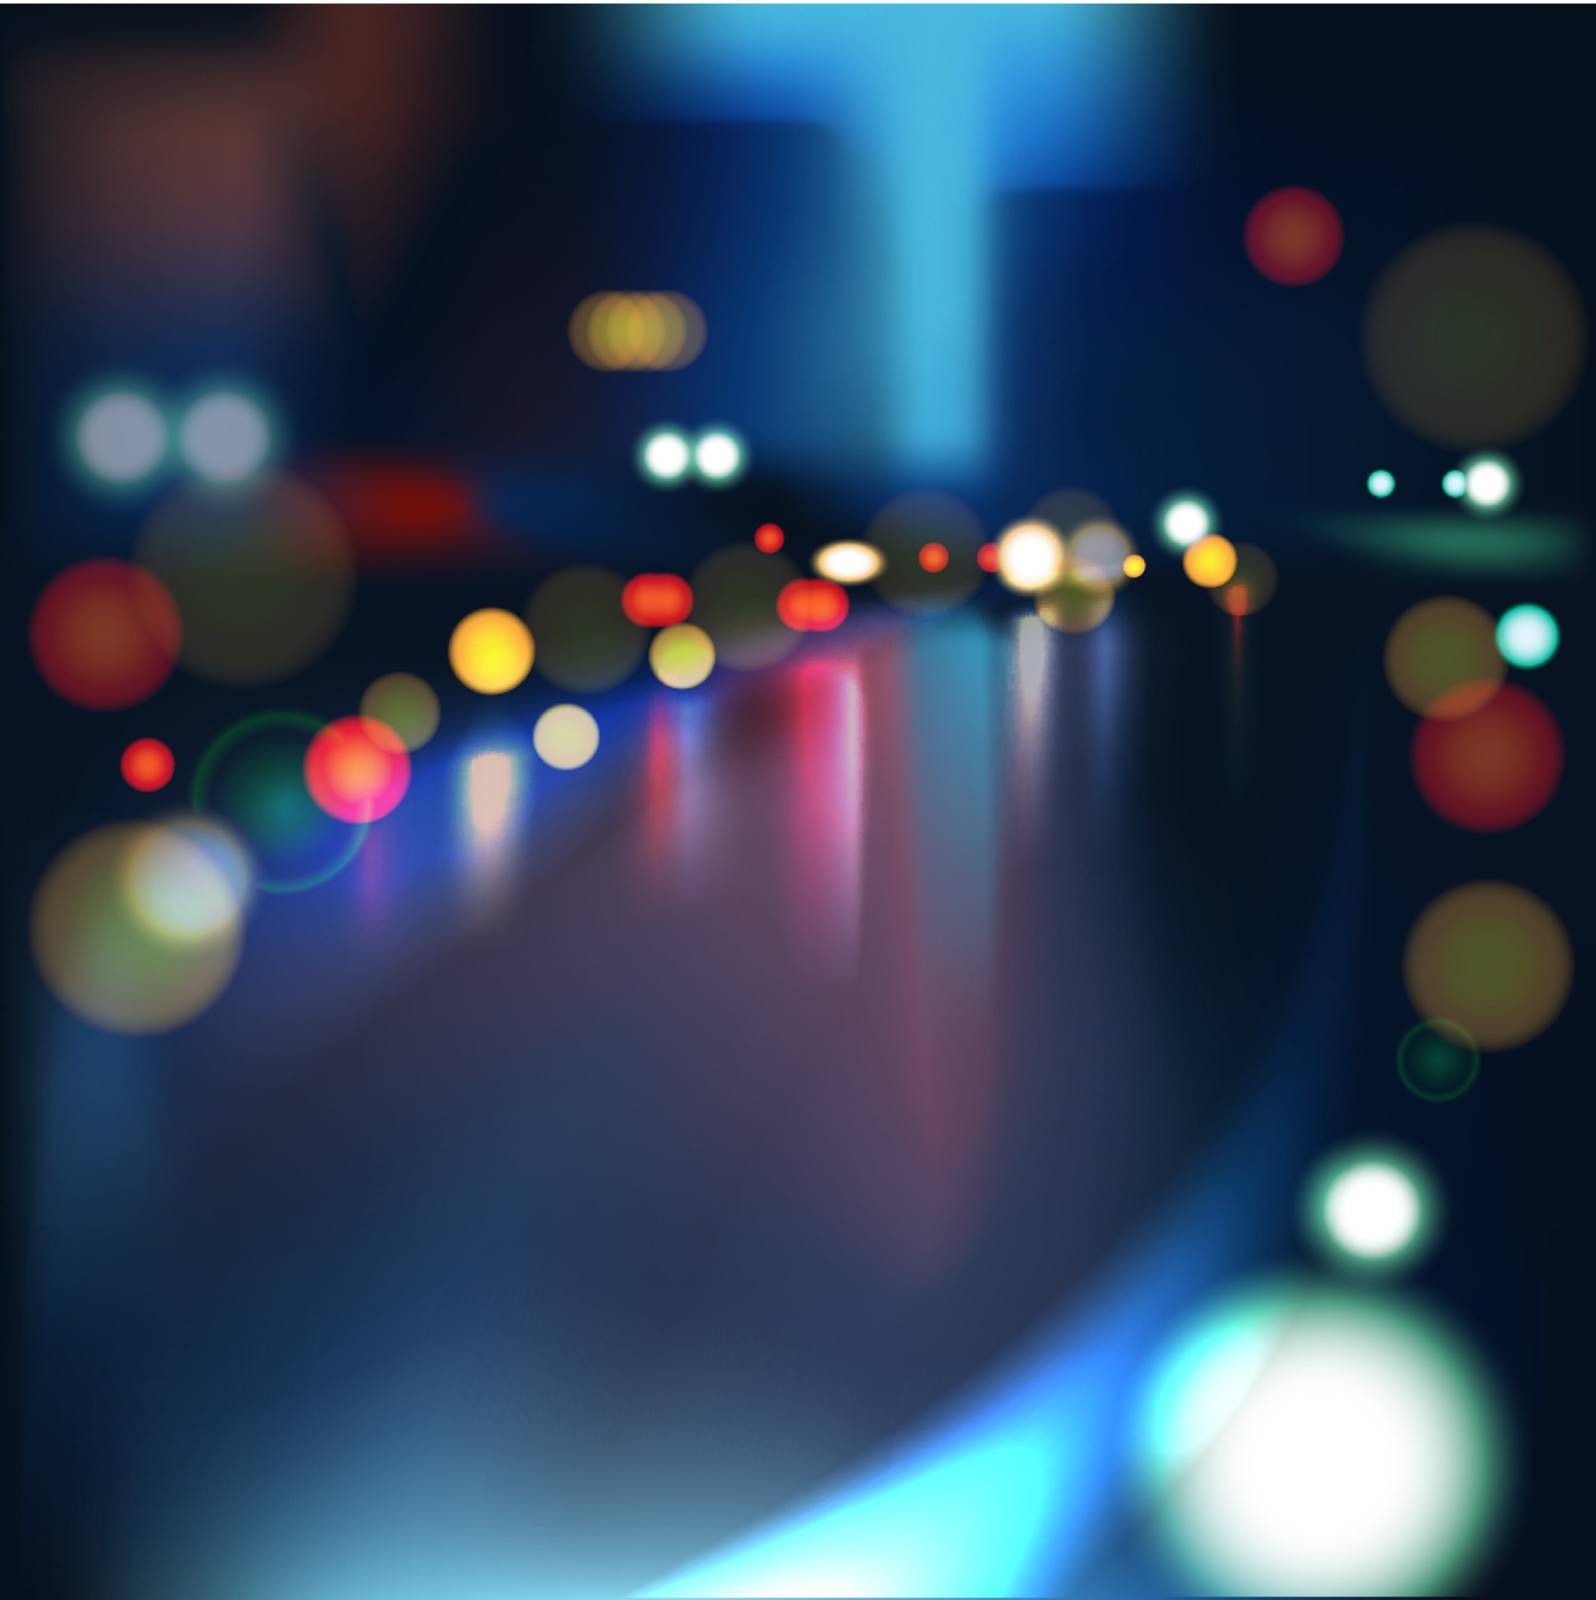 Blurred Defocused Lights on Rainy City Road at Night, vector Eps 10 illustration.